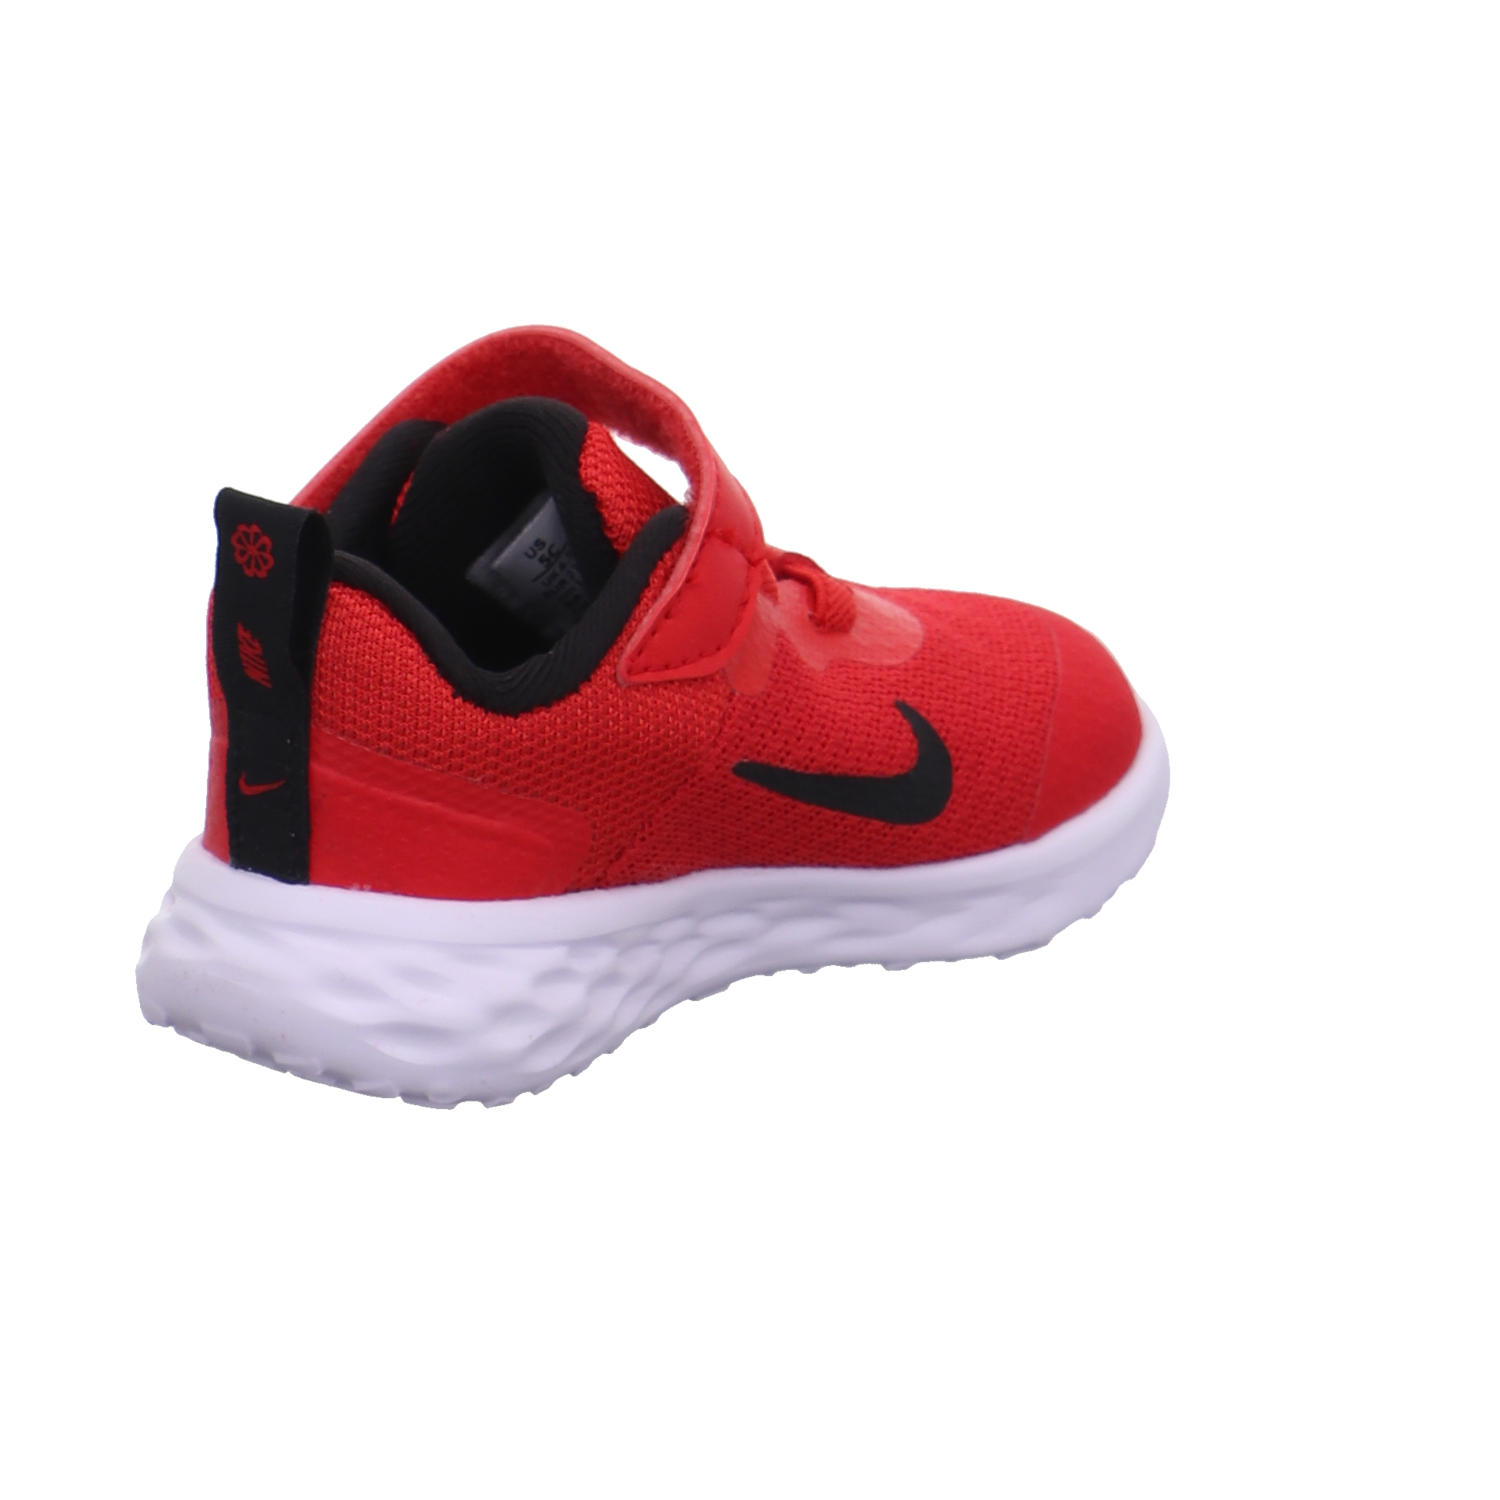 Nike Krabbel- und Lauflernschuhe rot kombi Bild5